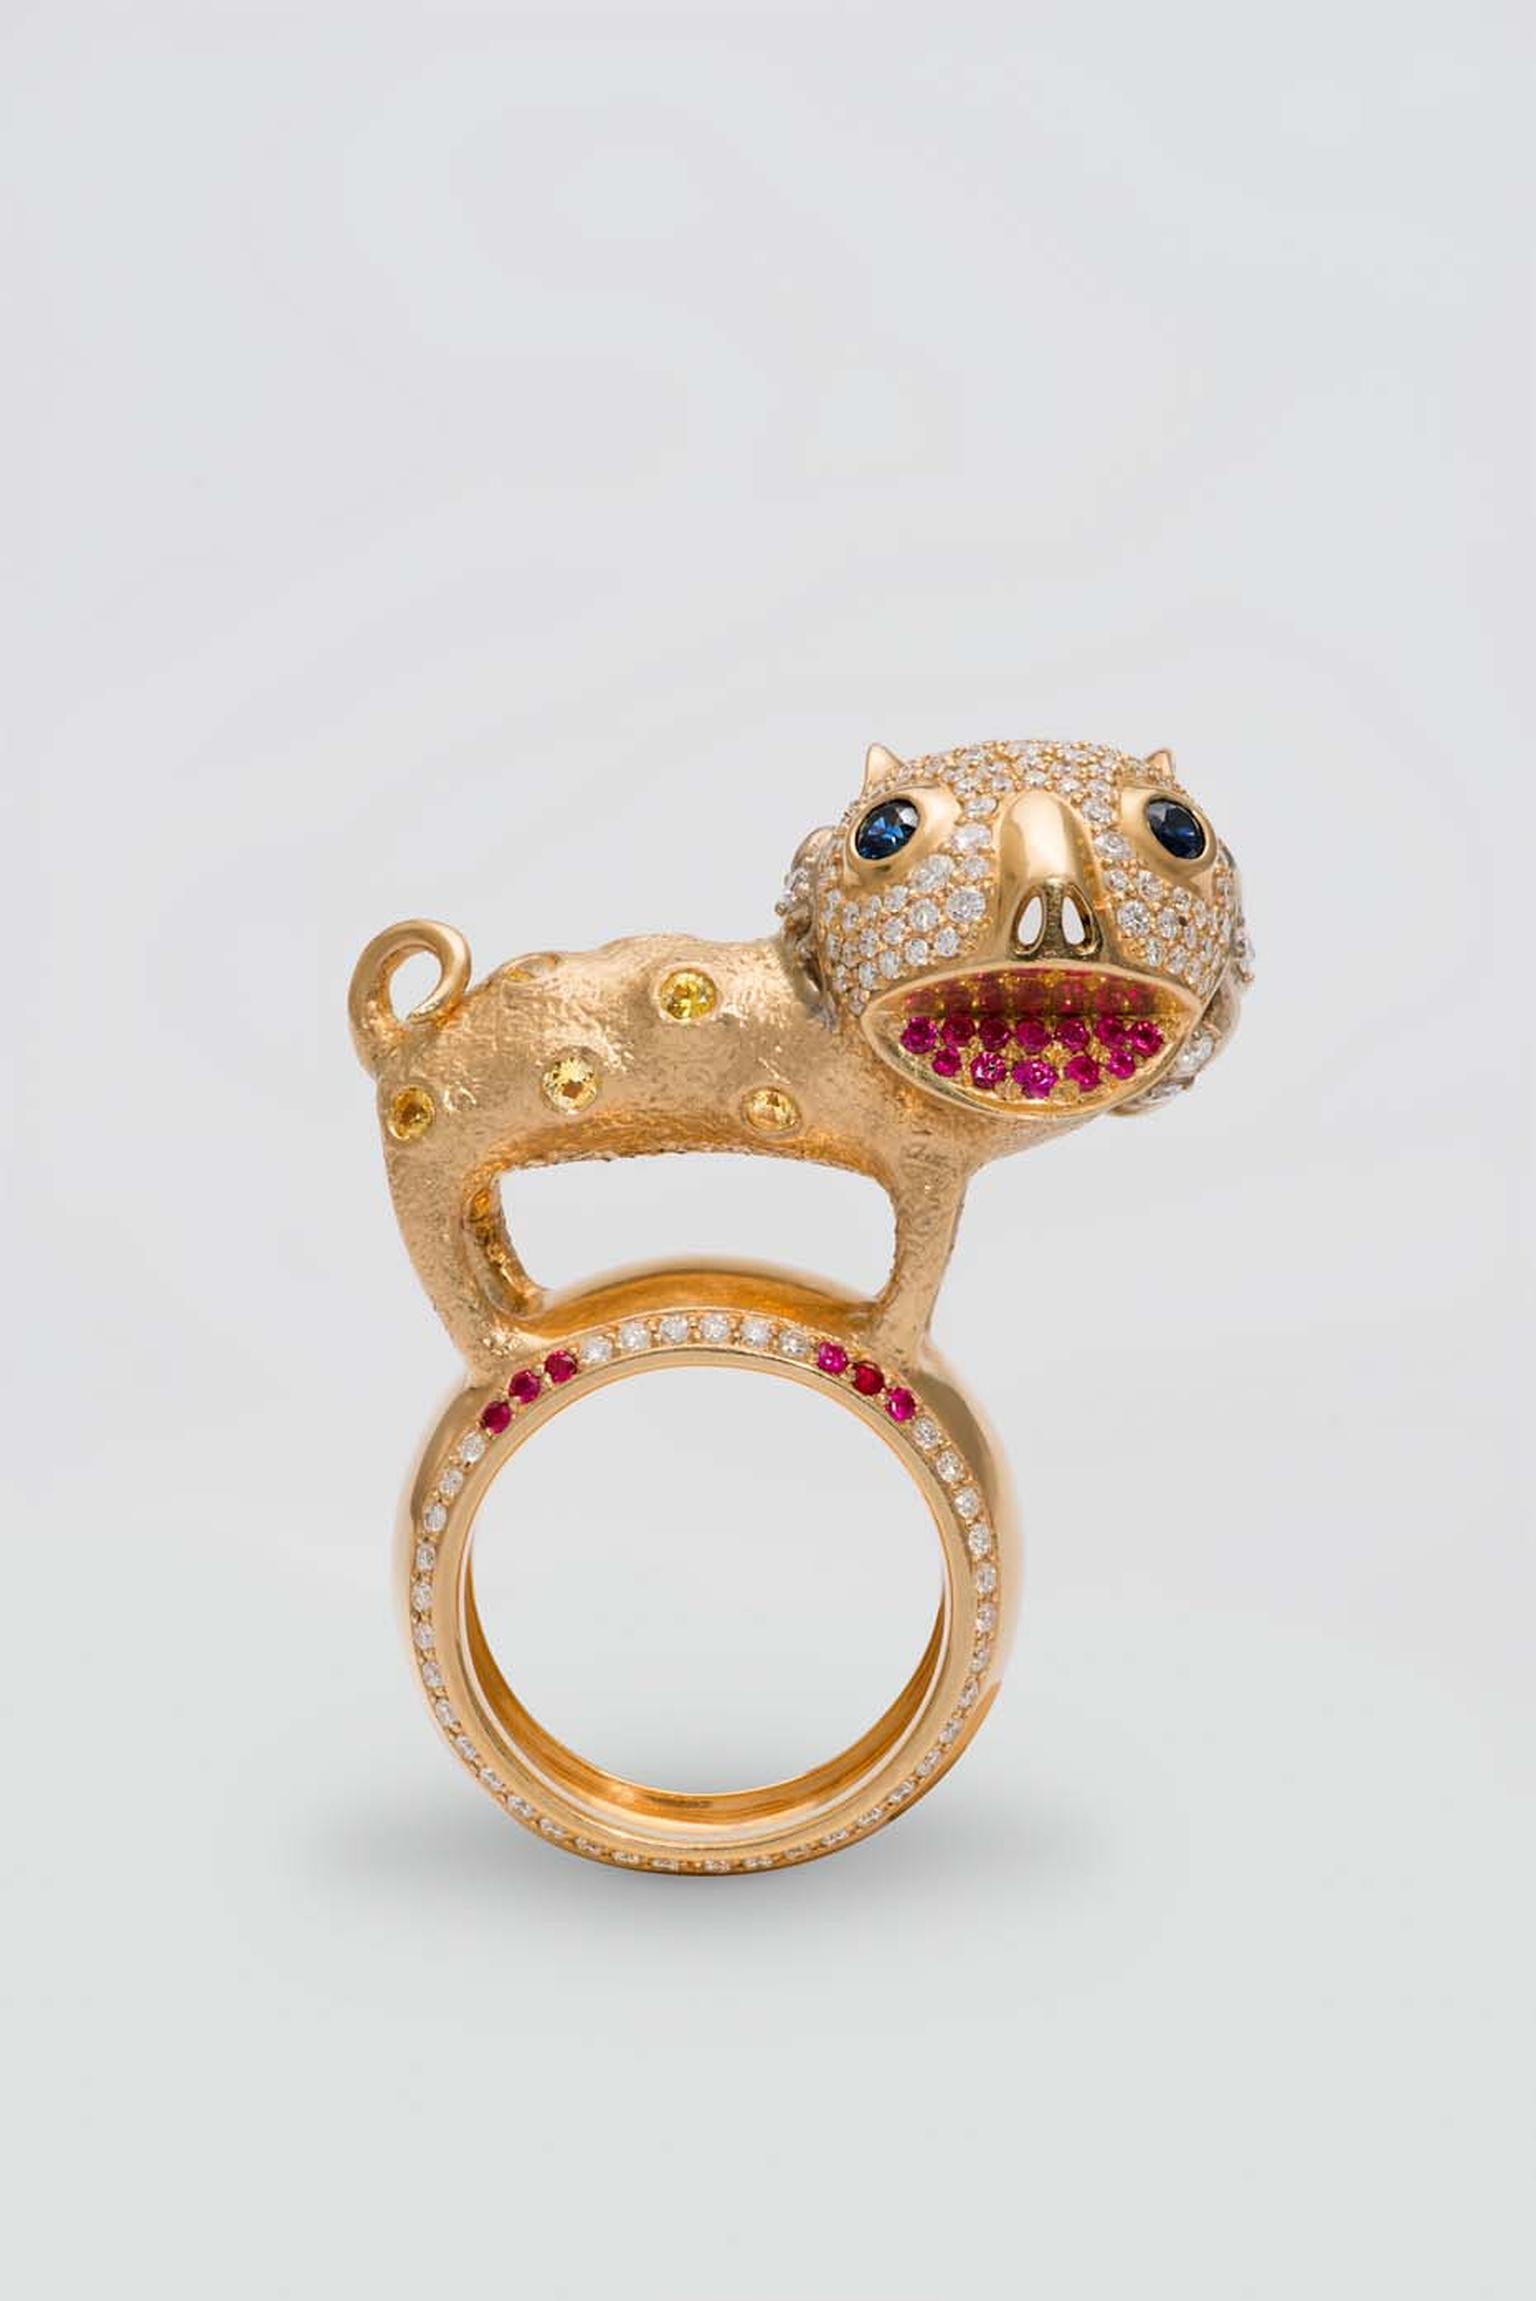 Dashi Namdakov white and yellow gold Lion ring featuring diamonds, rubies and sapphires.